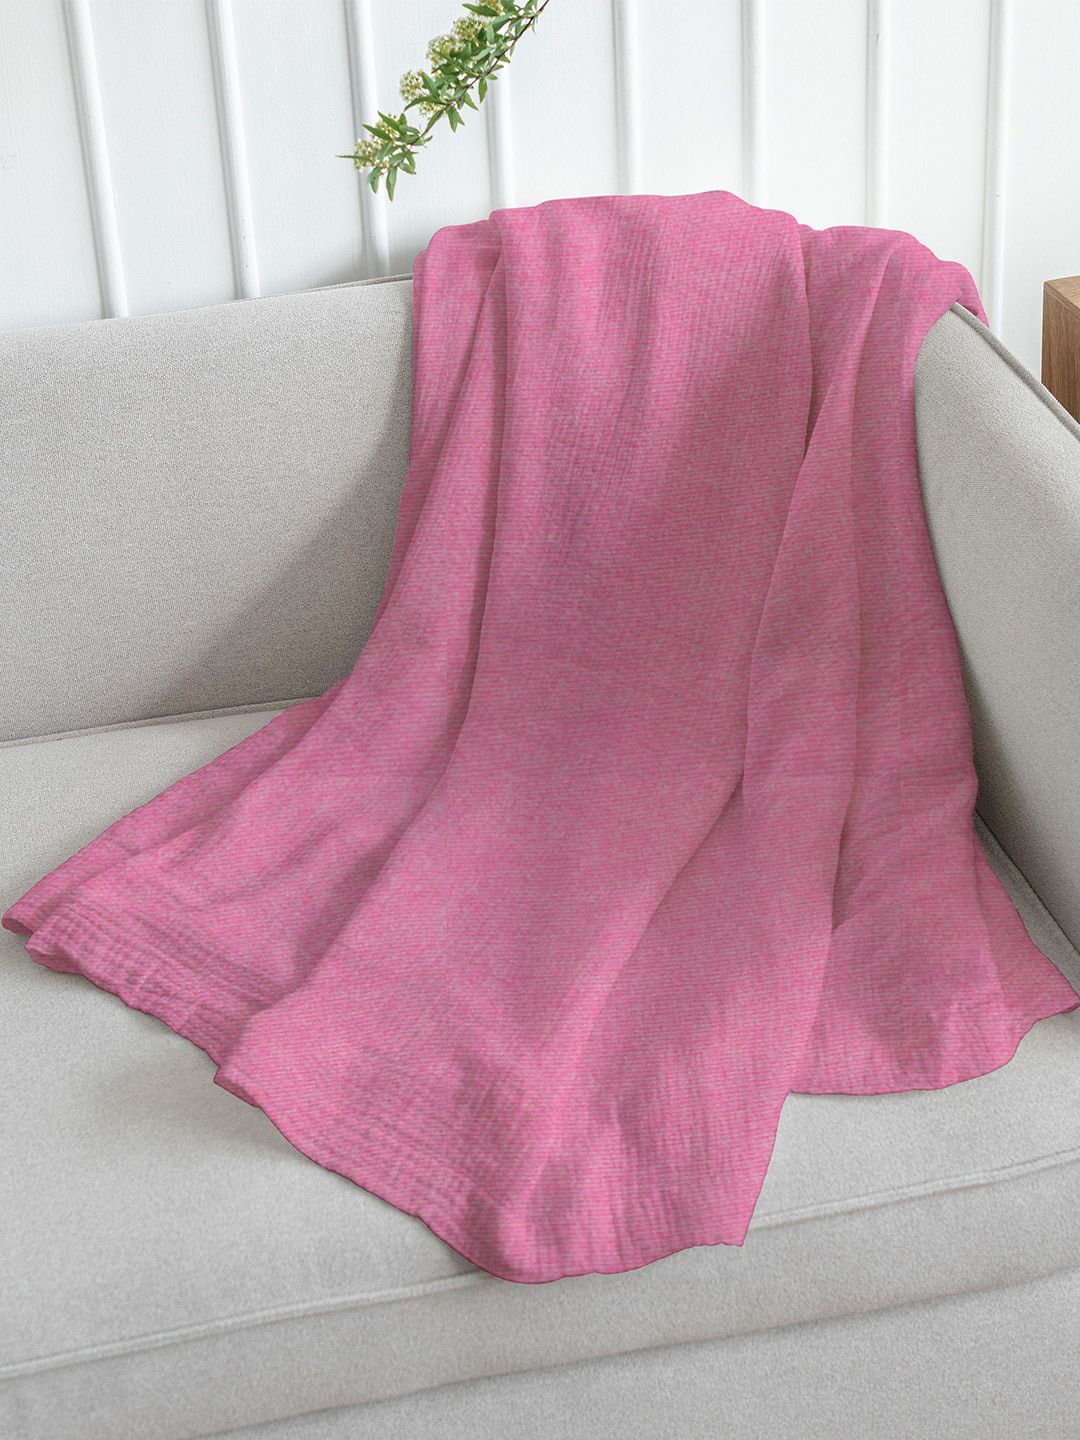 Satcap India Pink Fleece AC Room 150 GSM Single Bed Blanket Price in India